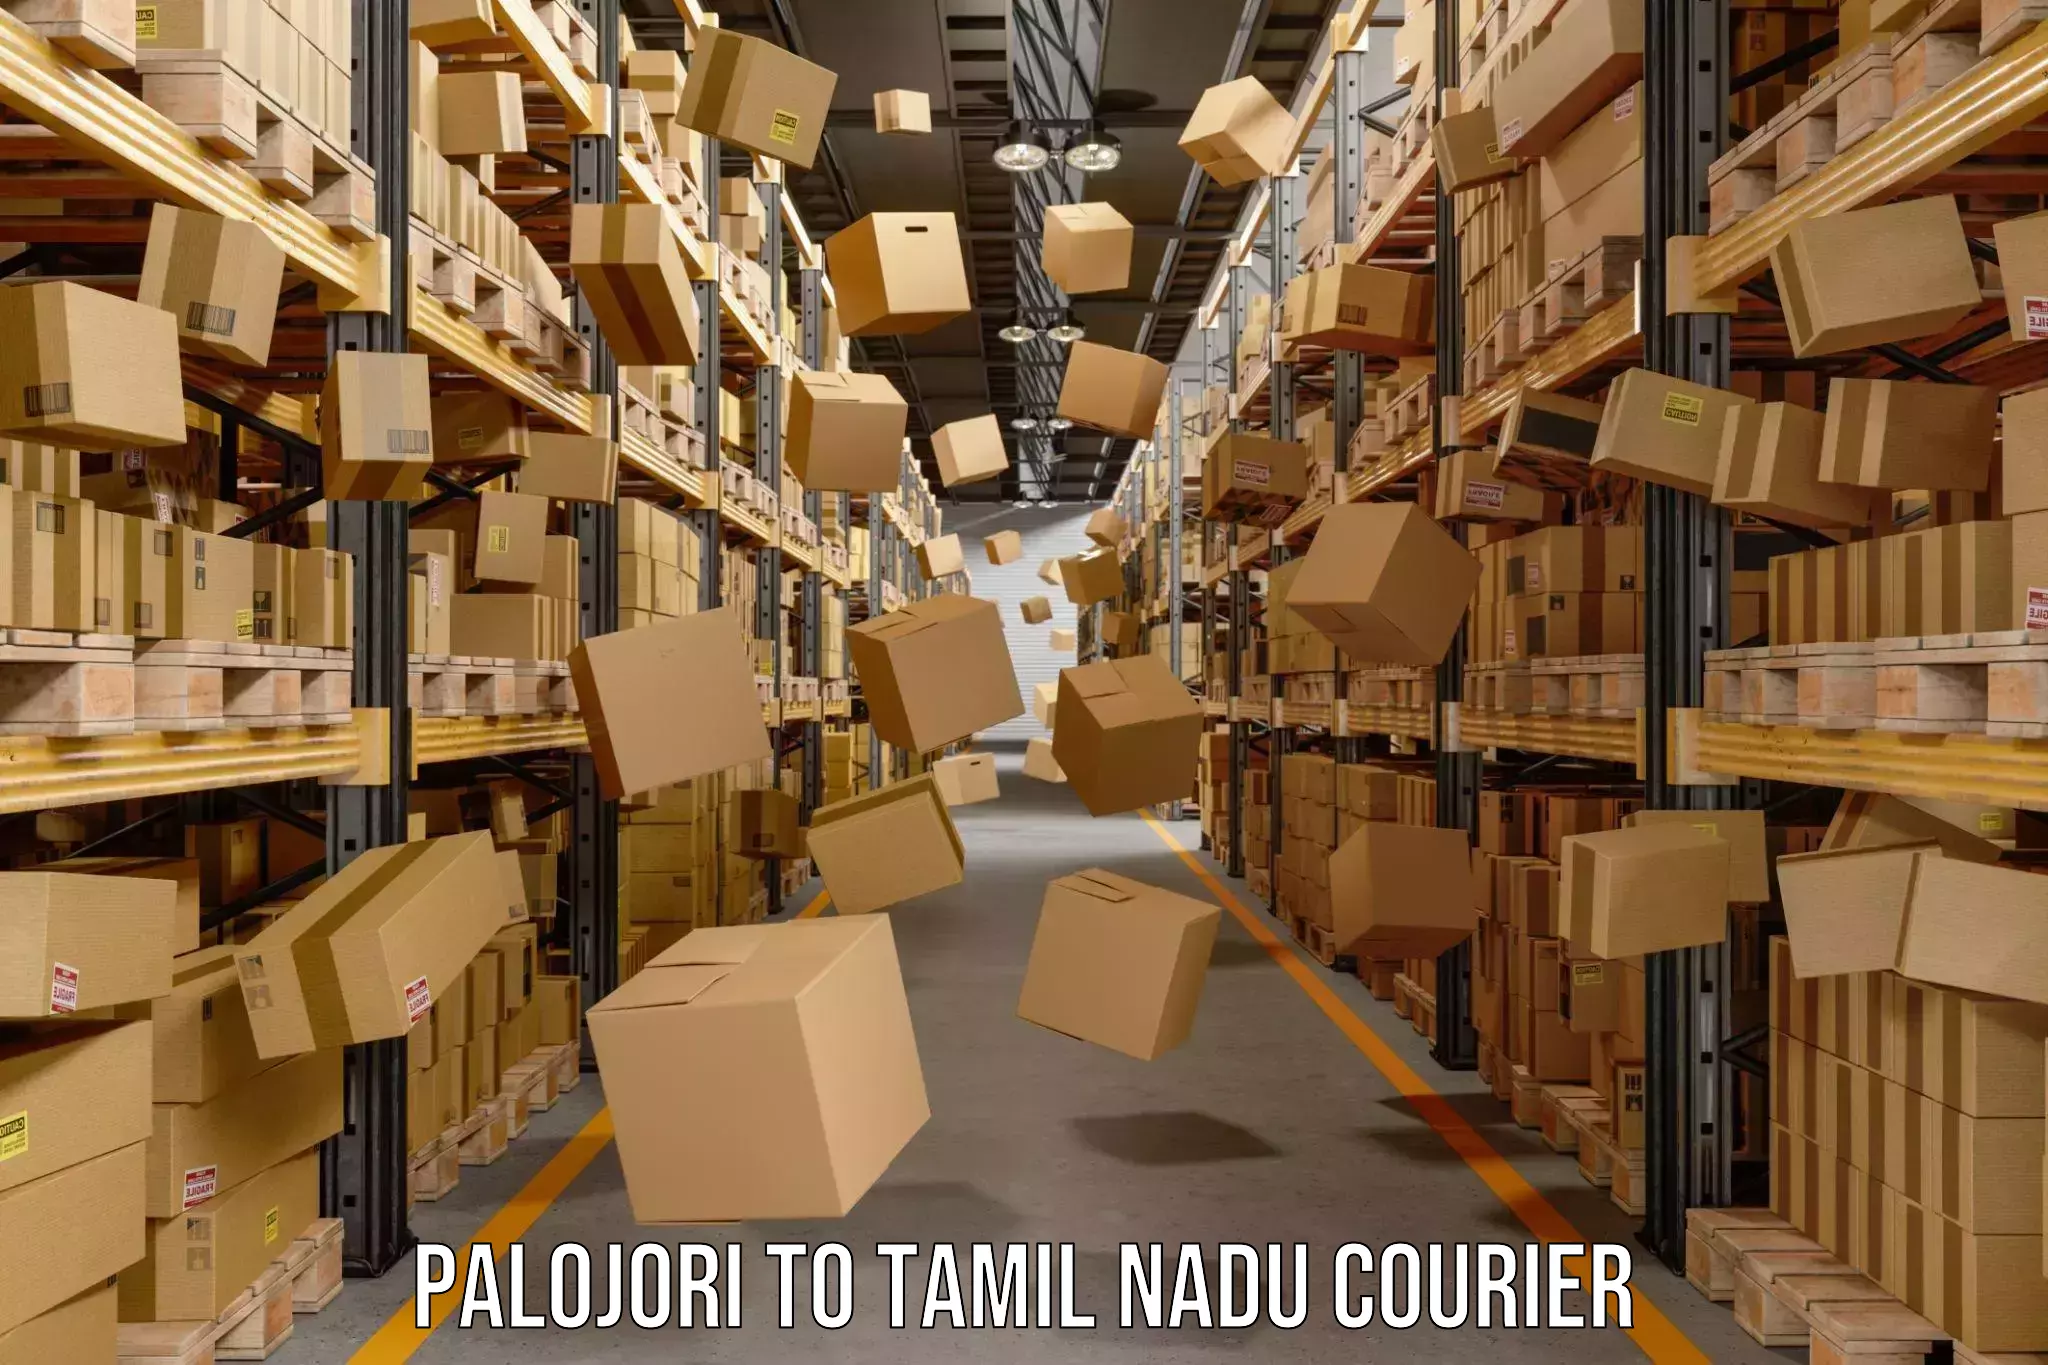 Courier app in Palojori to IIIT Tiruchirappalli